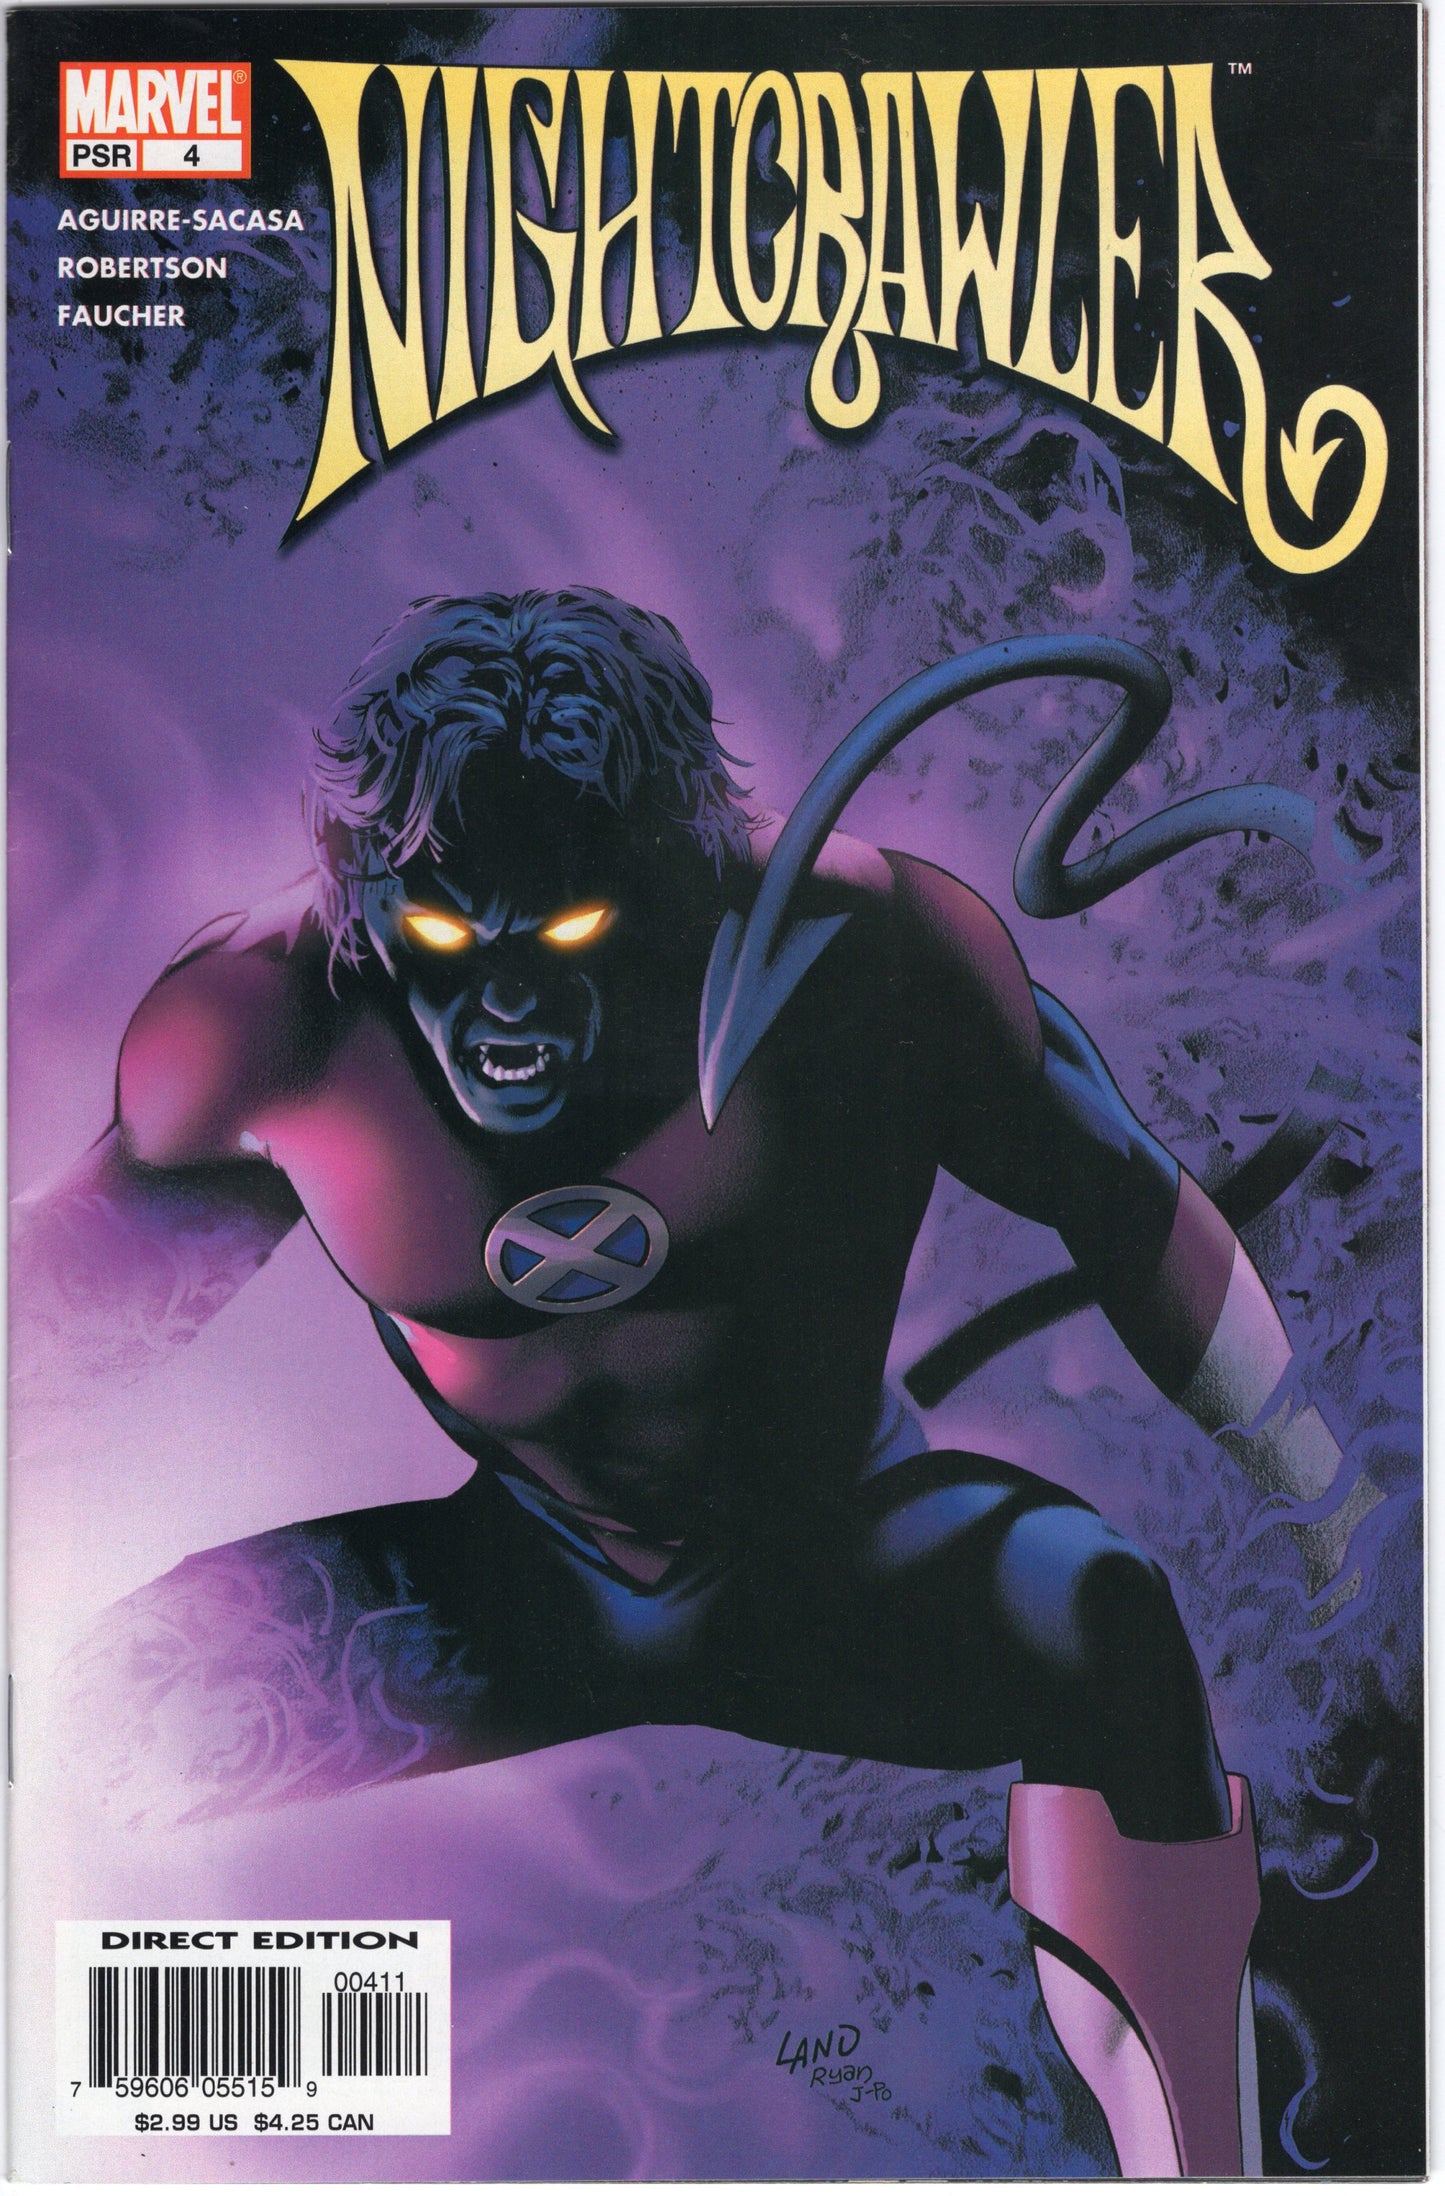 Nightcrawler Issue #4 (Feb. 2005, Marvel Comics) VF/NM